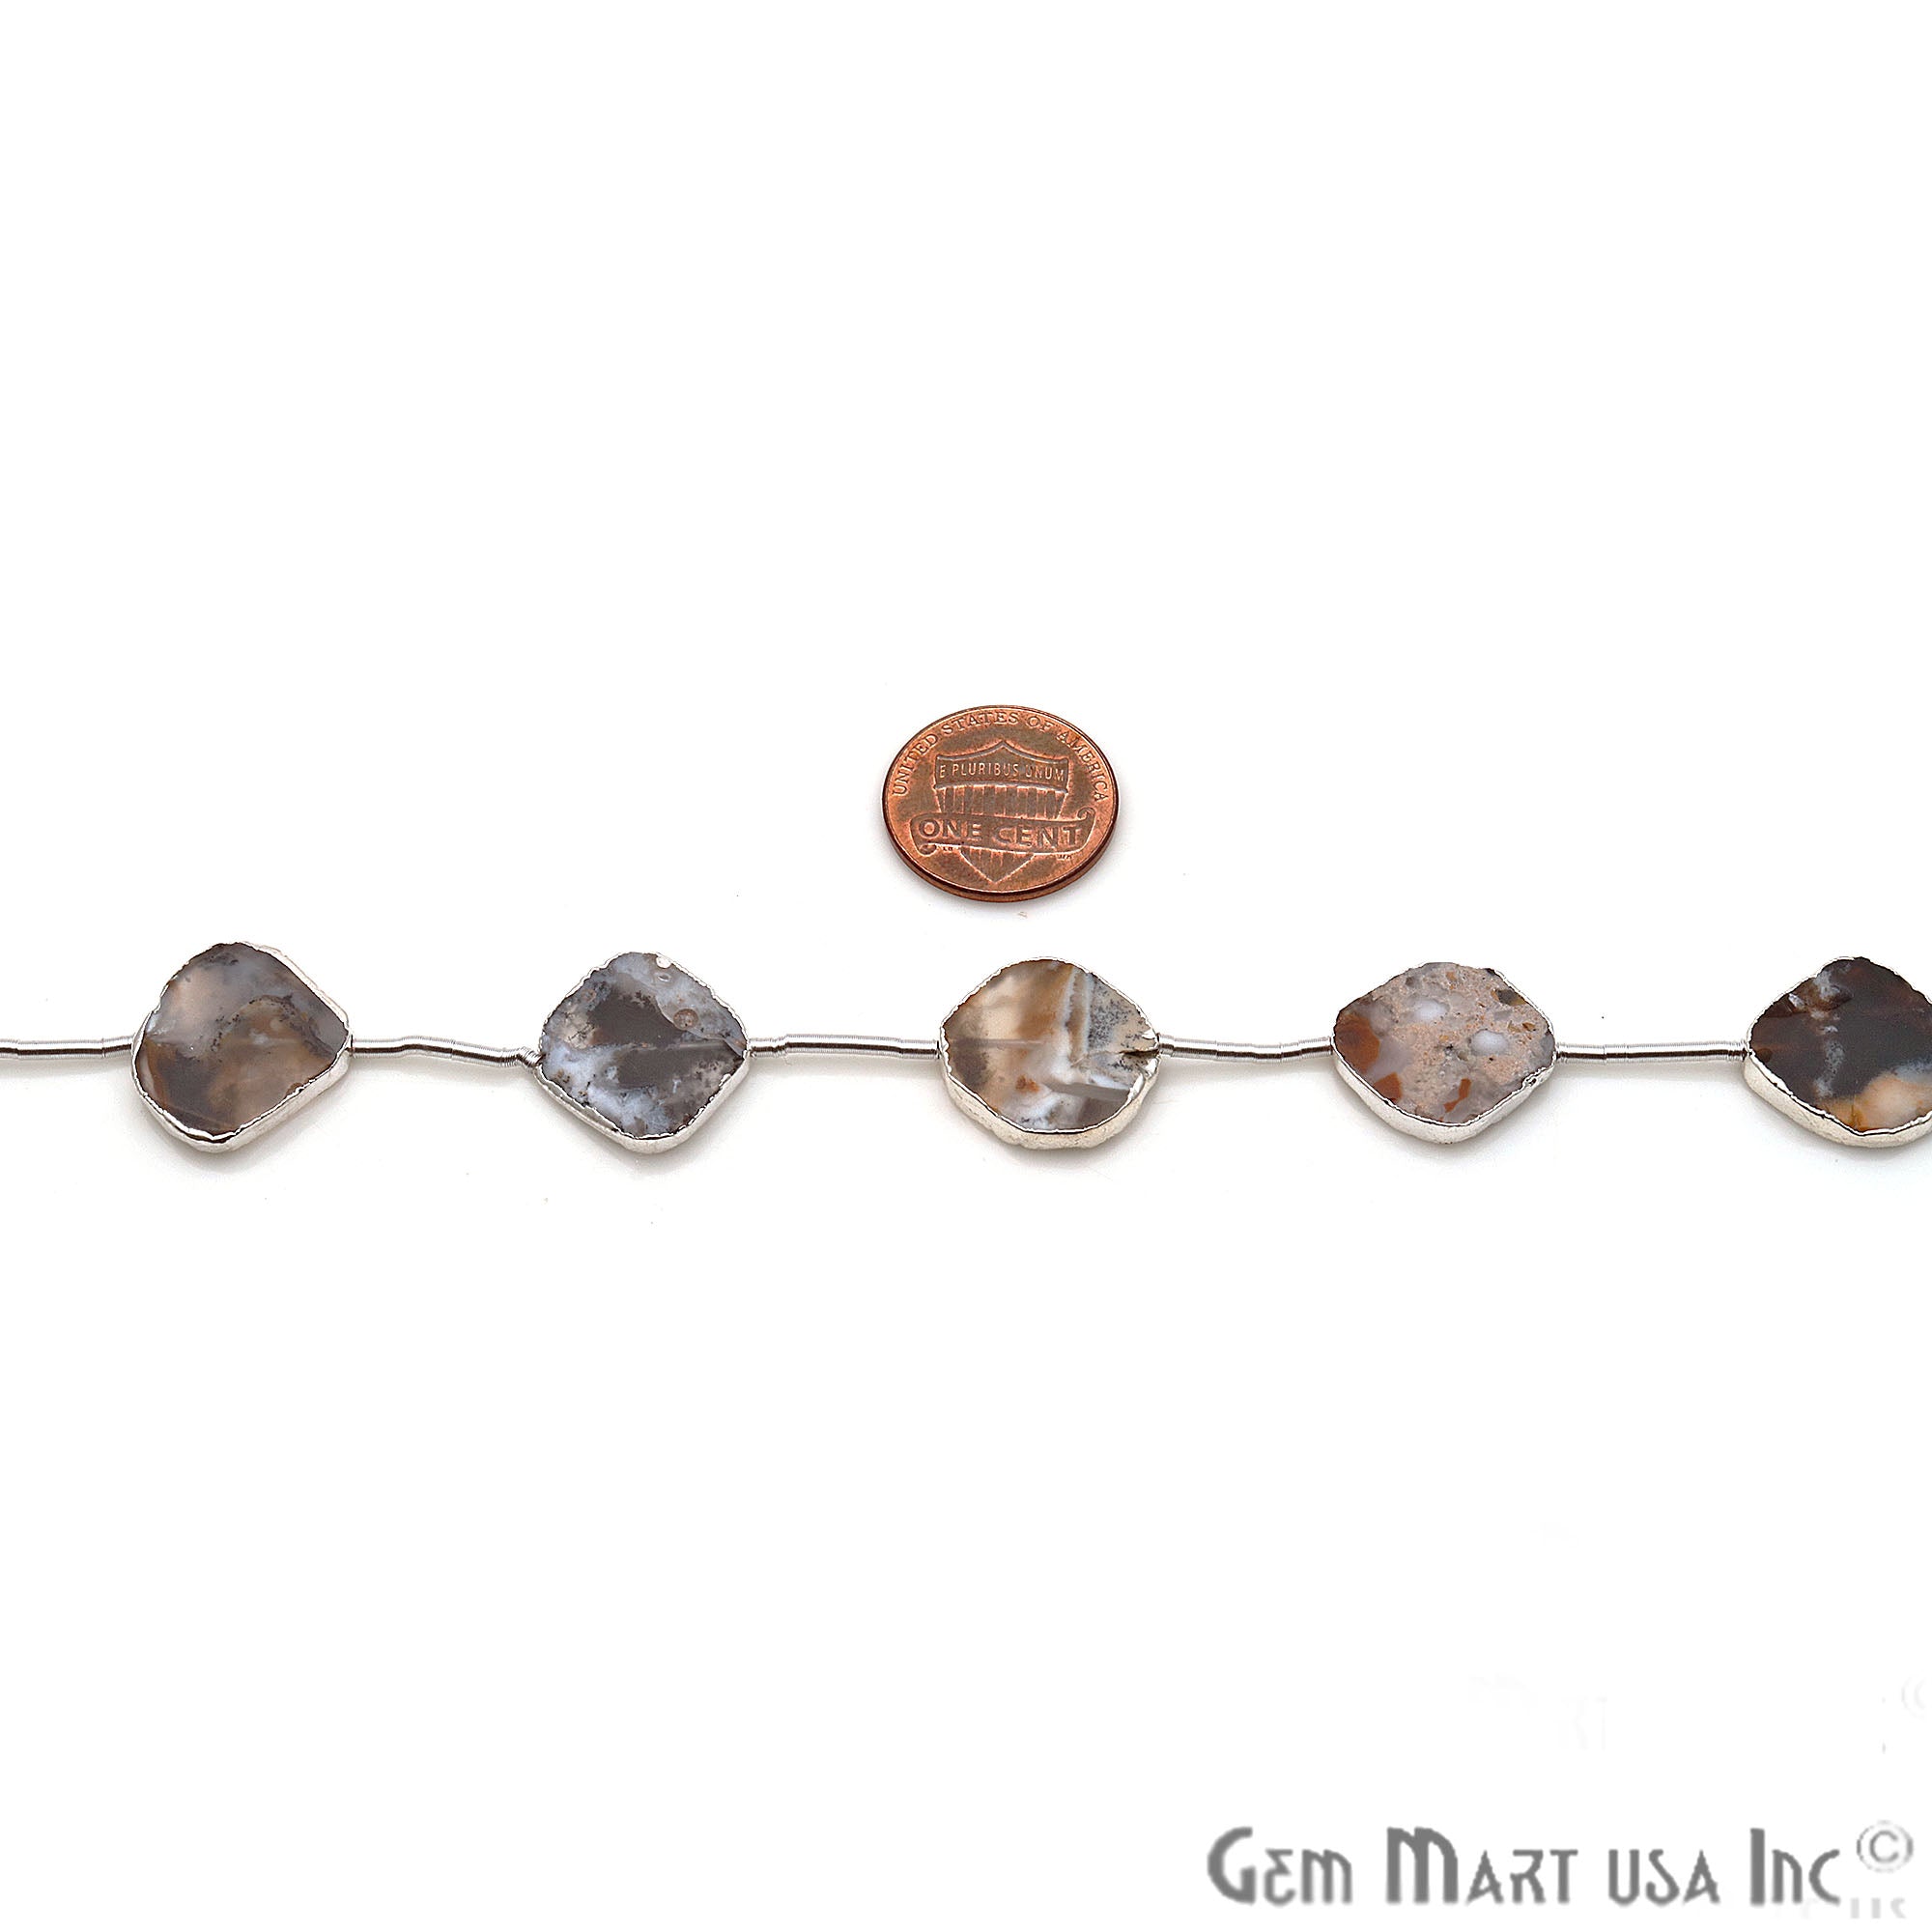 Dendrite Opal Free Form 18x15mm Silver Edged Crafting Beads Gemstone Strands 9INCH - GemMartUSA